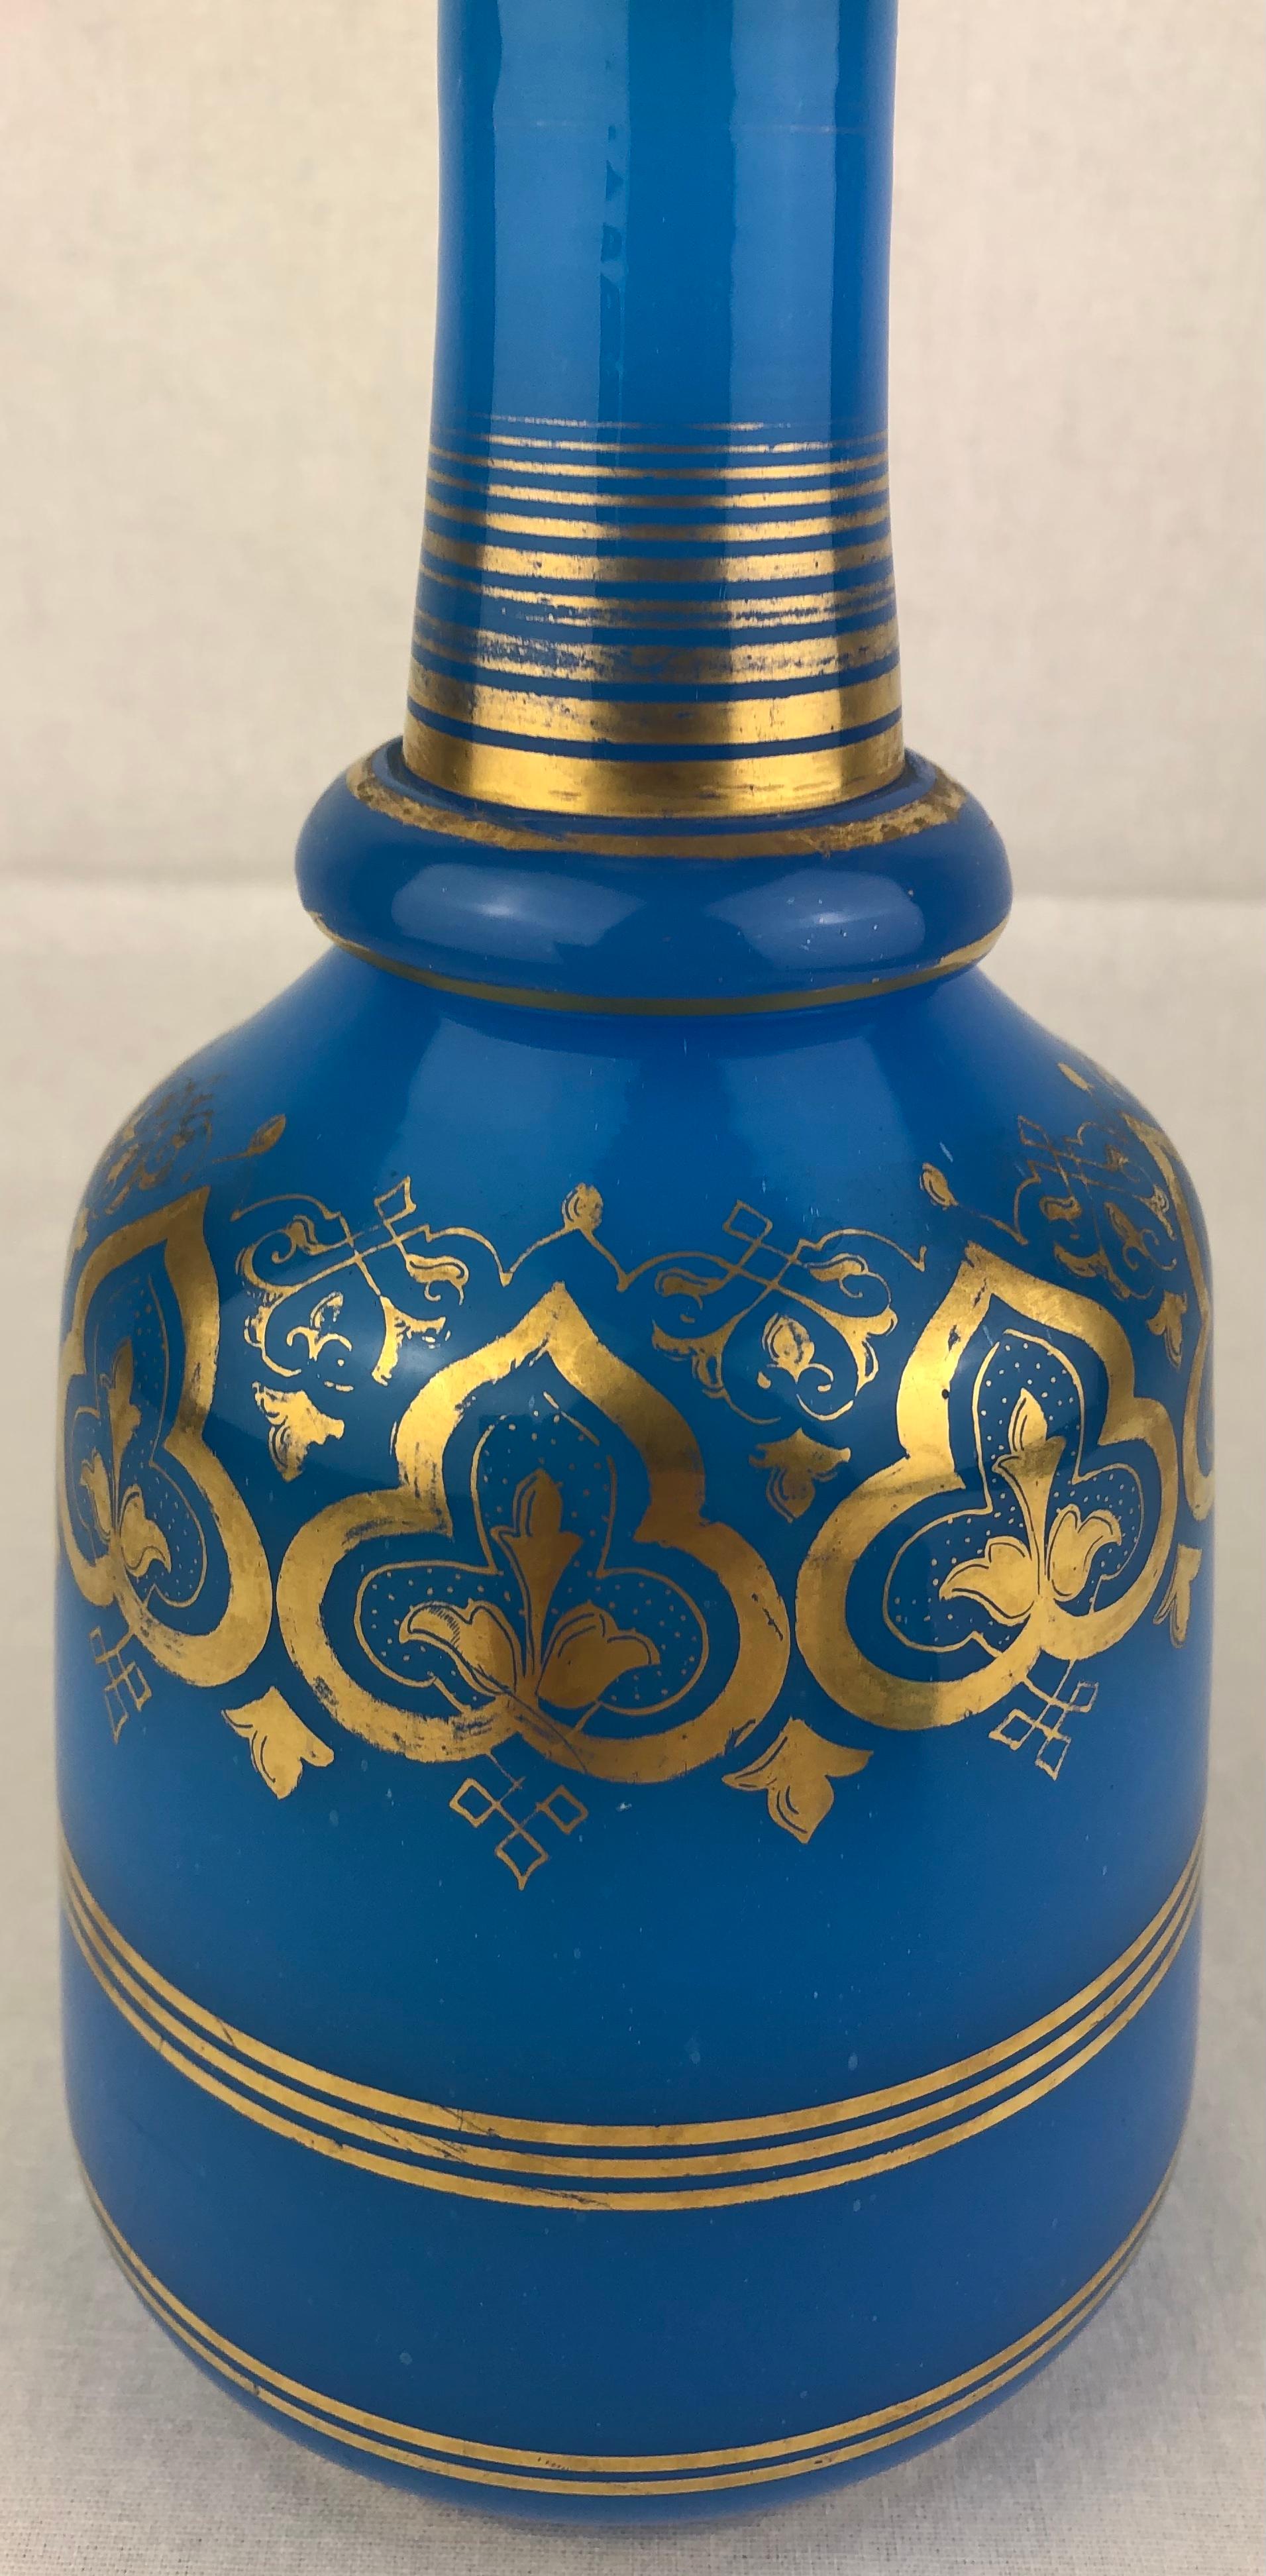 baccarat blue bottle